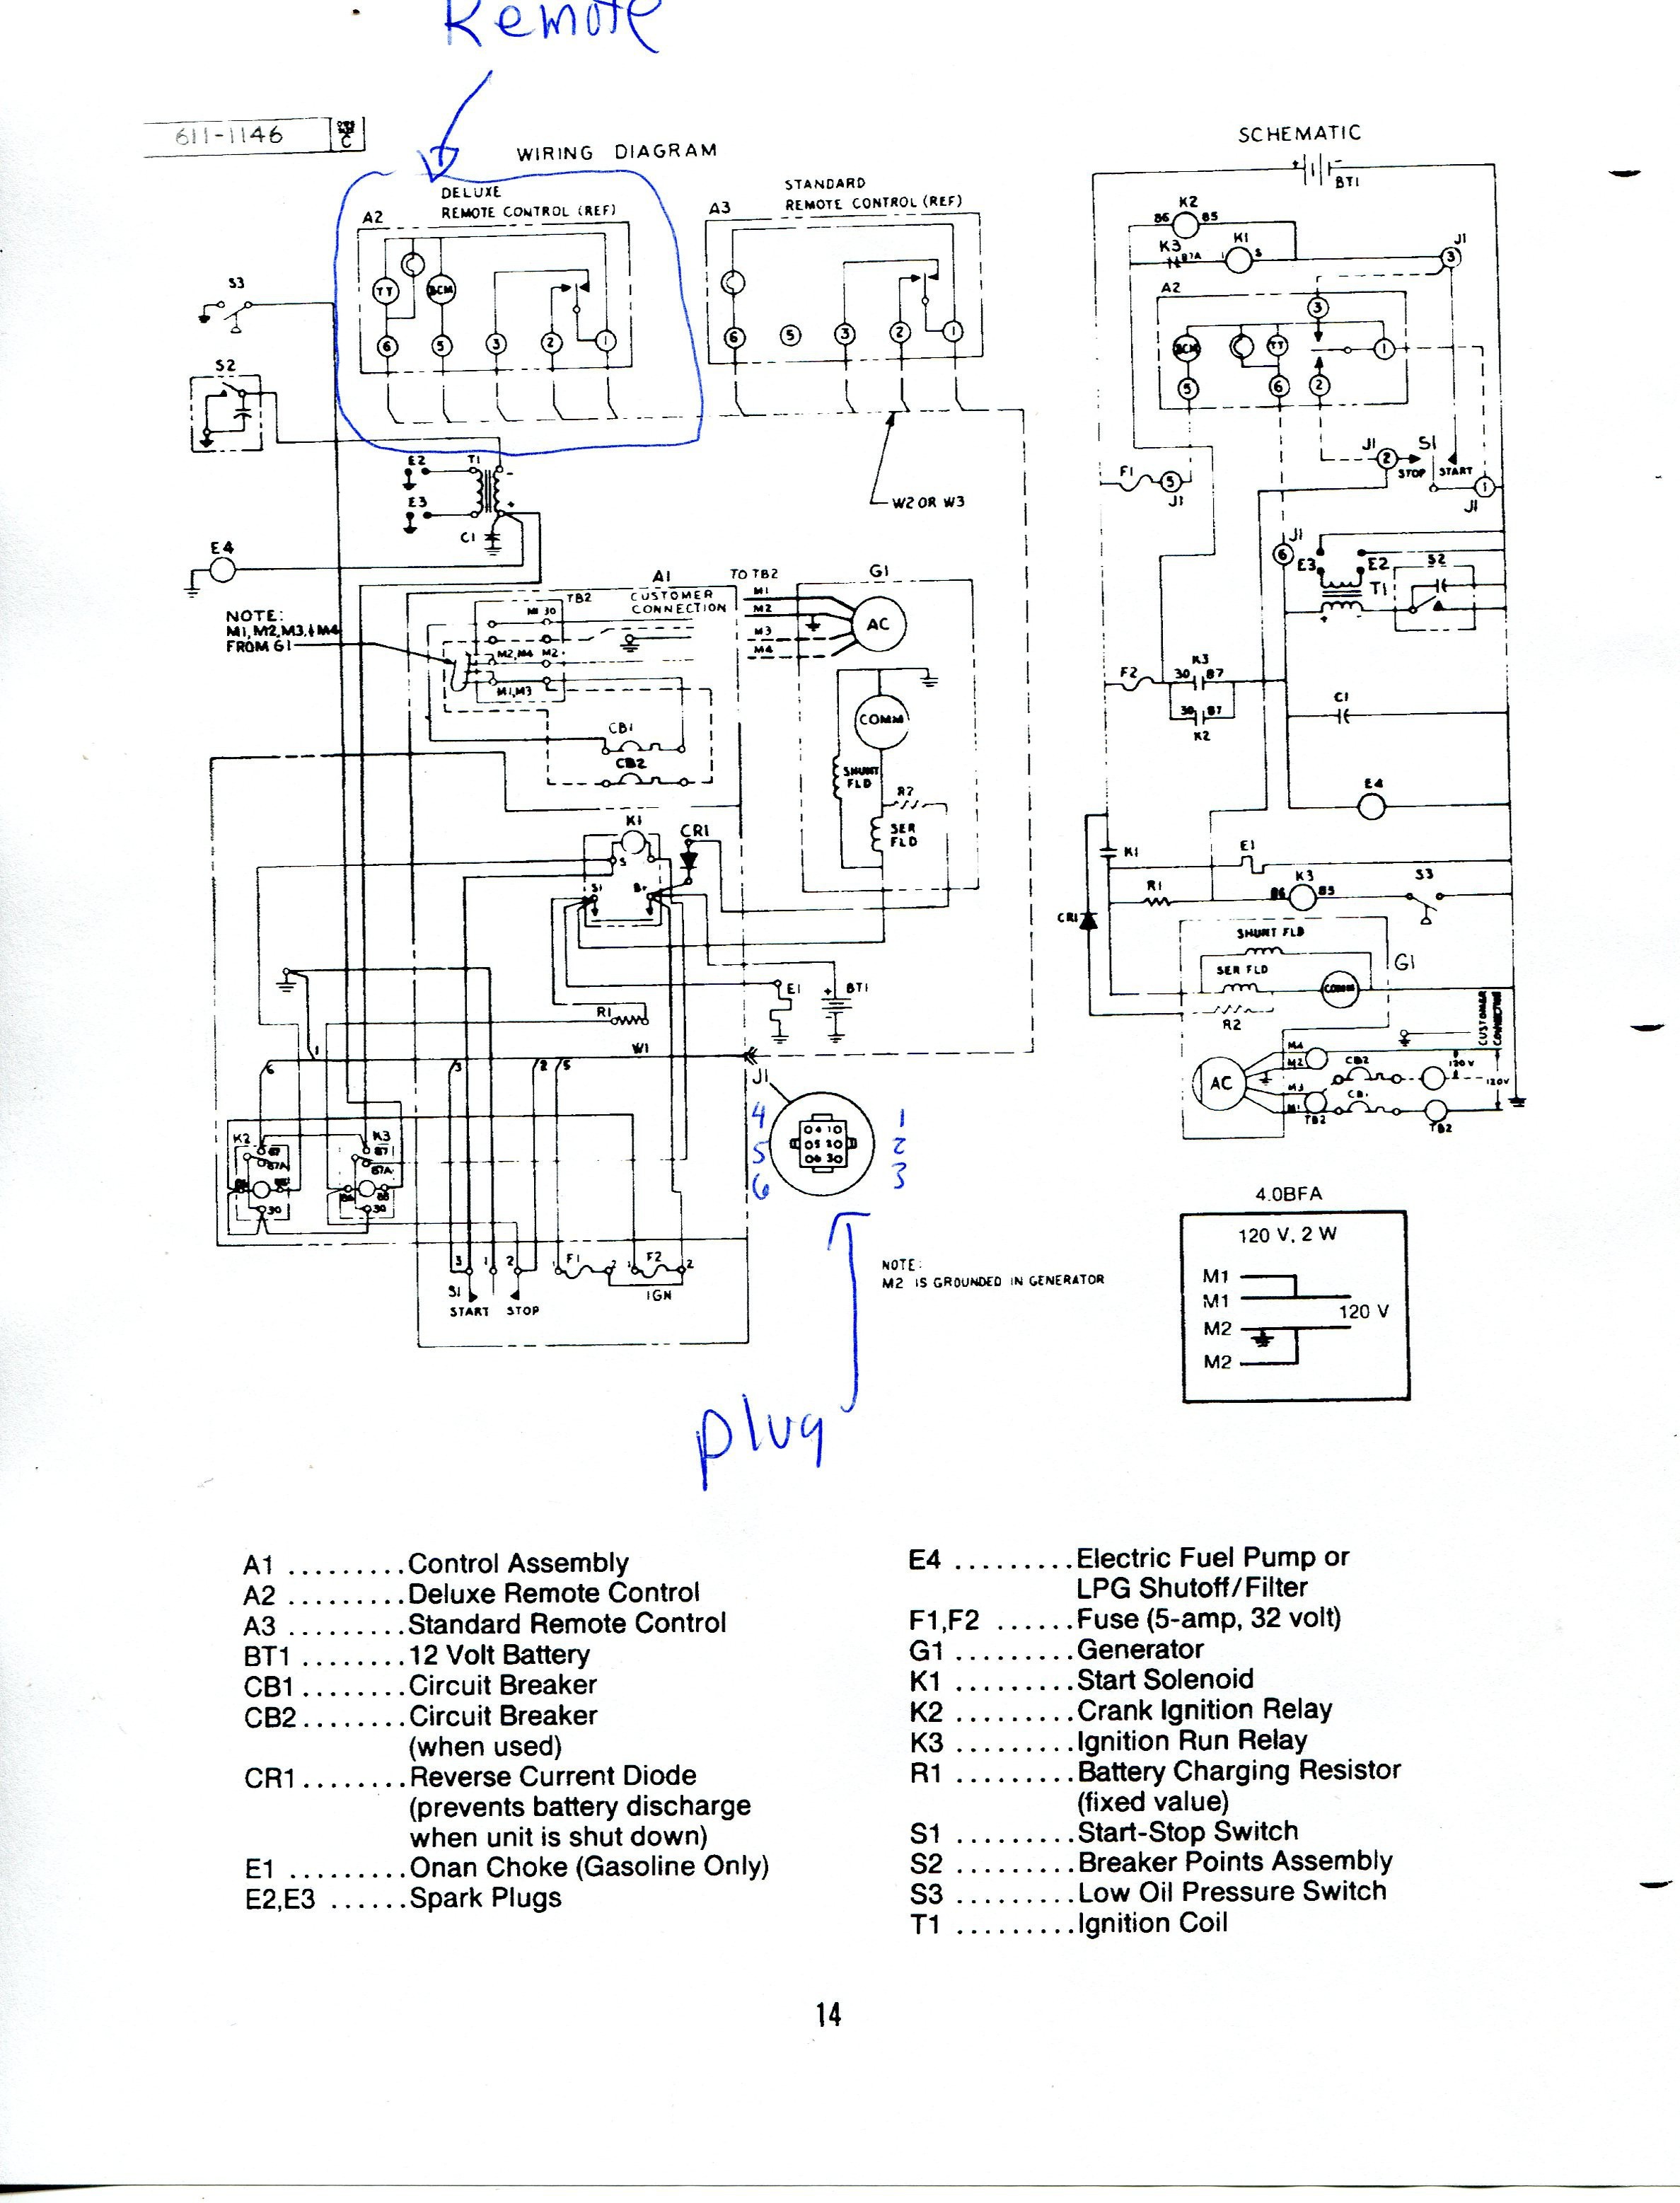 Wiring Diagram an Generator Valid Luxury An Generator Electric Choke Circuit Gift Simple Wiring